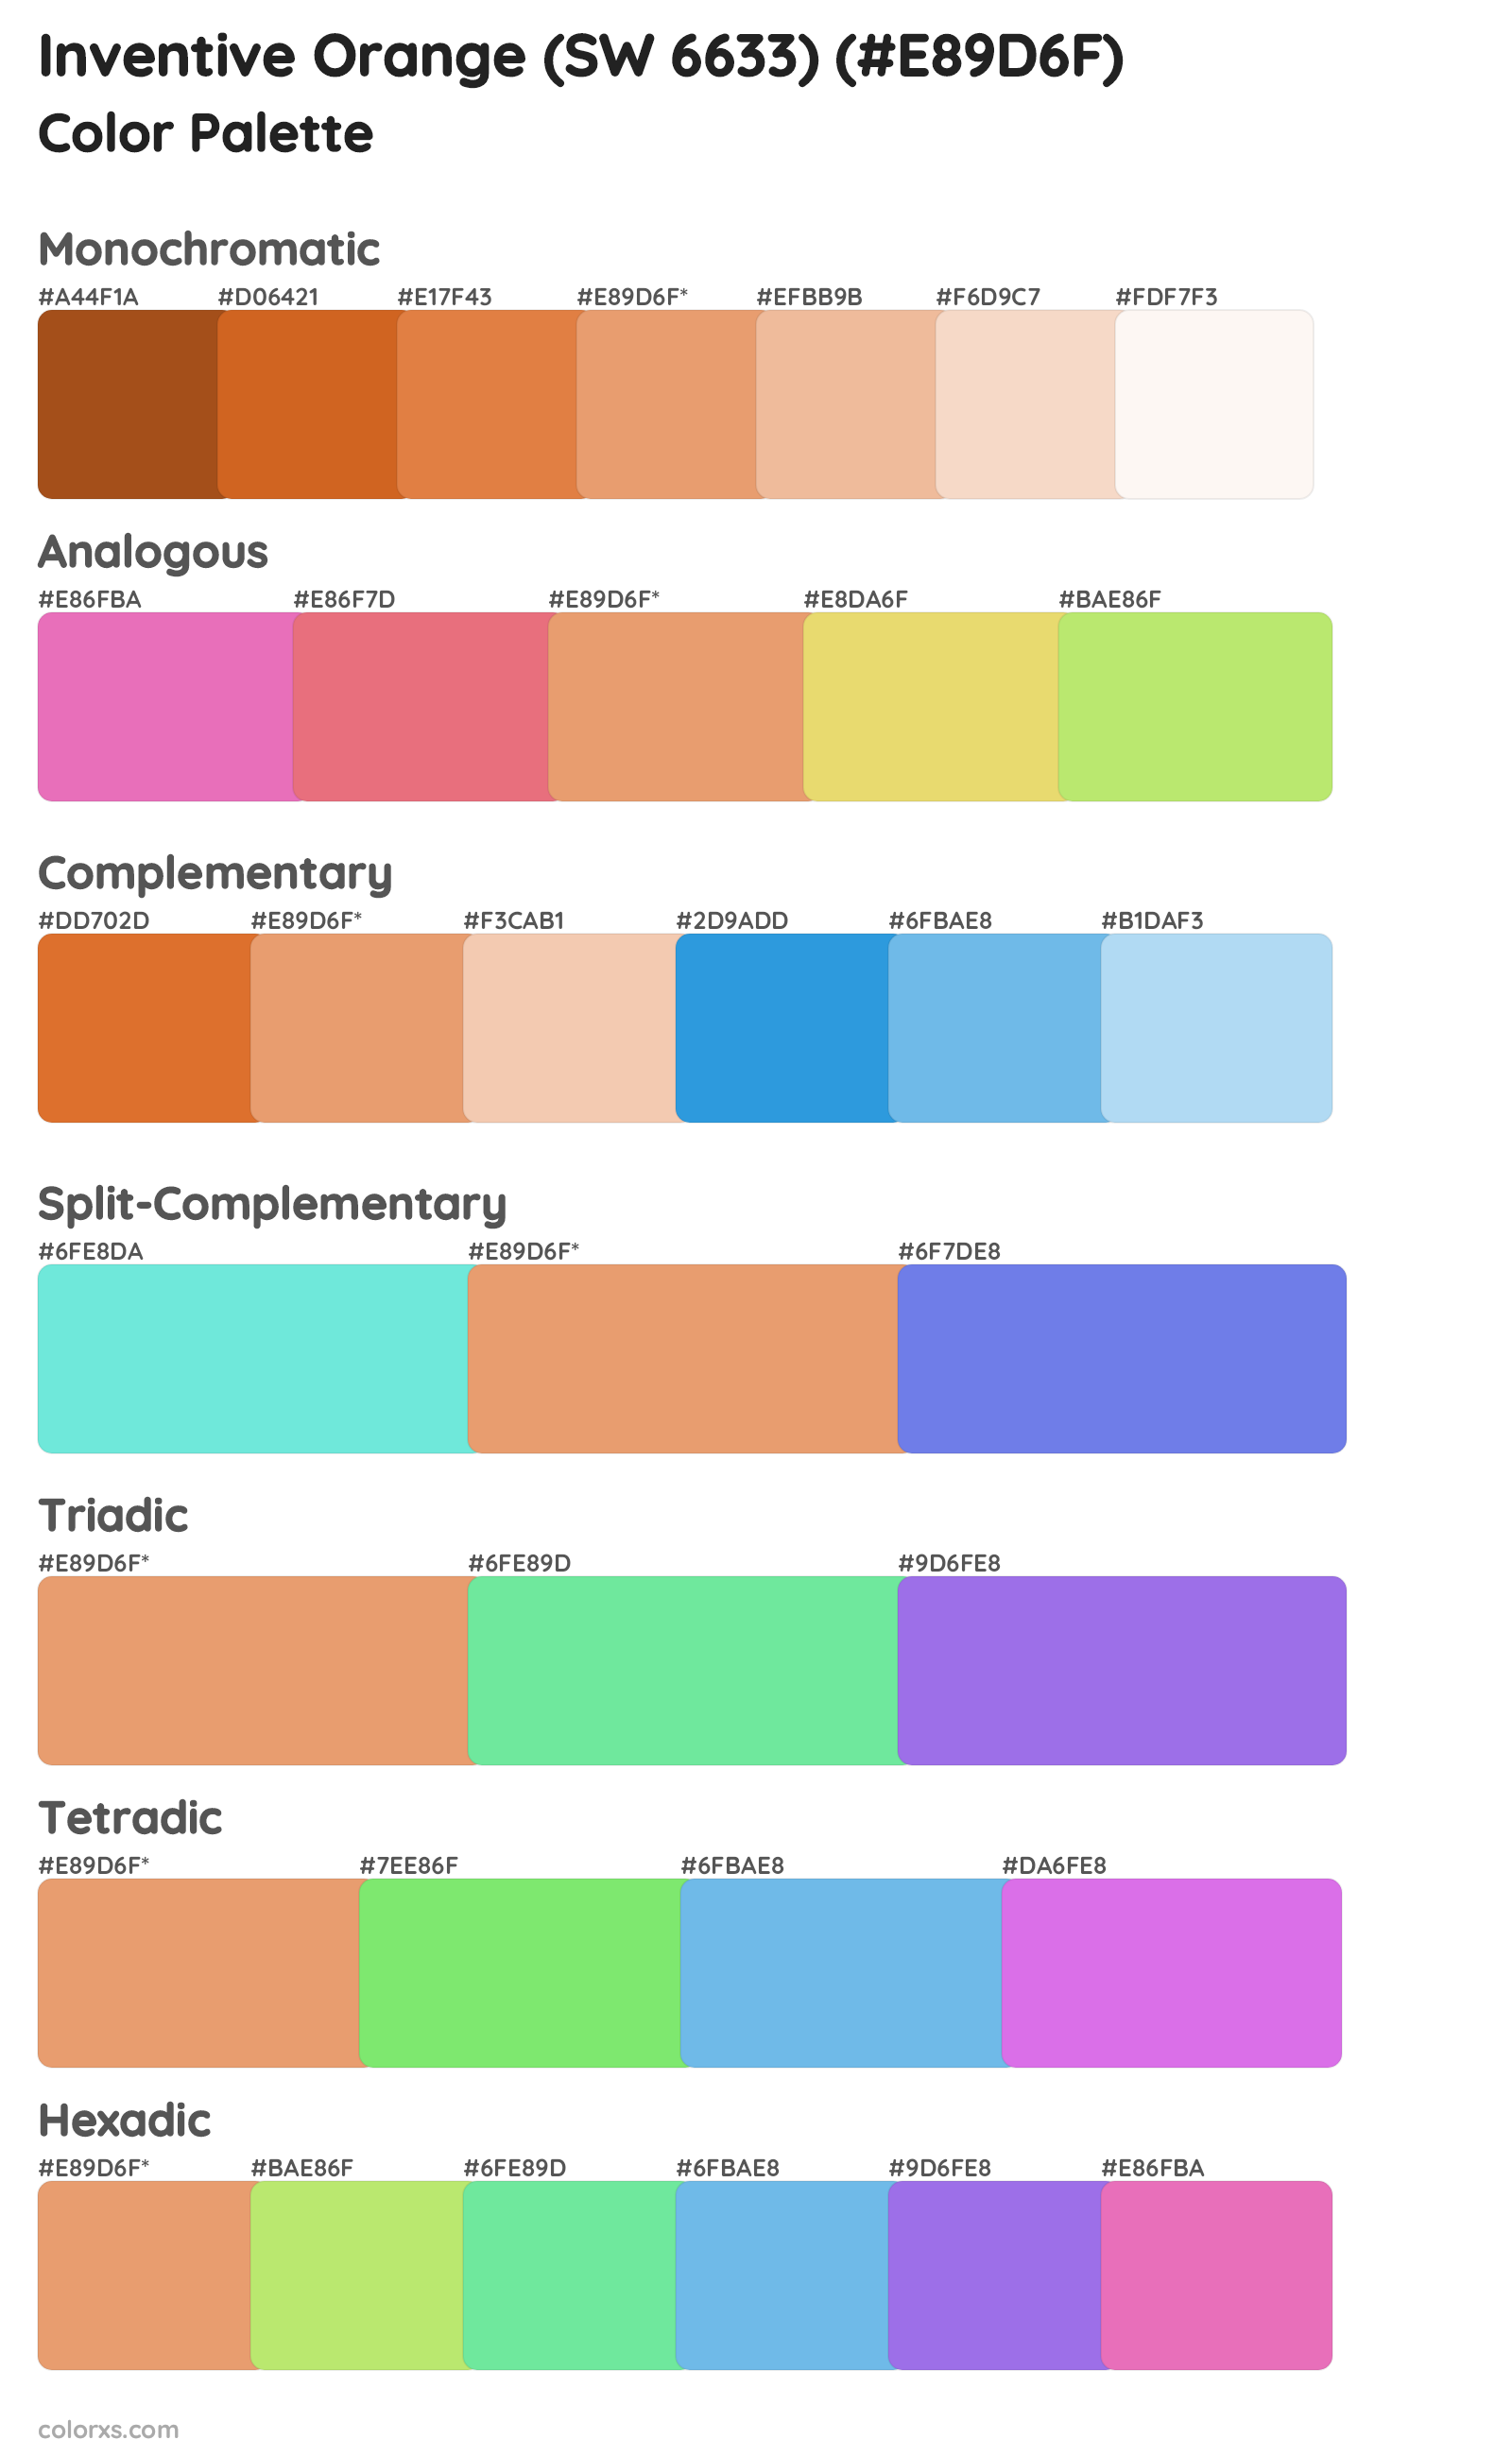 Inventive Orange (SW 6633) Color Scheme Palettes